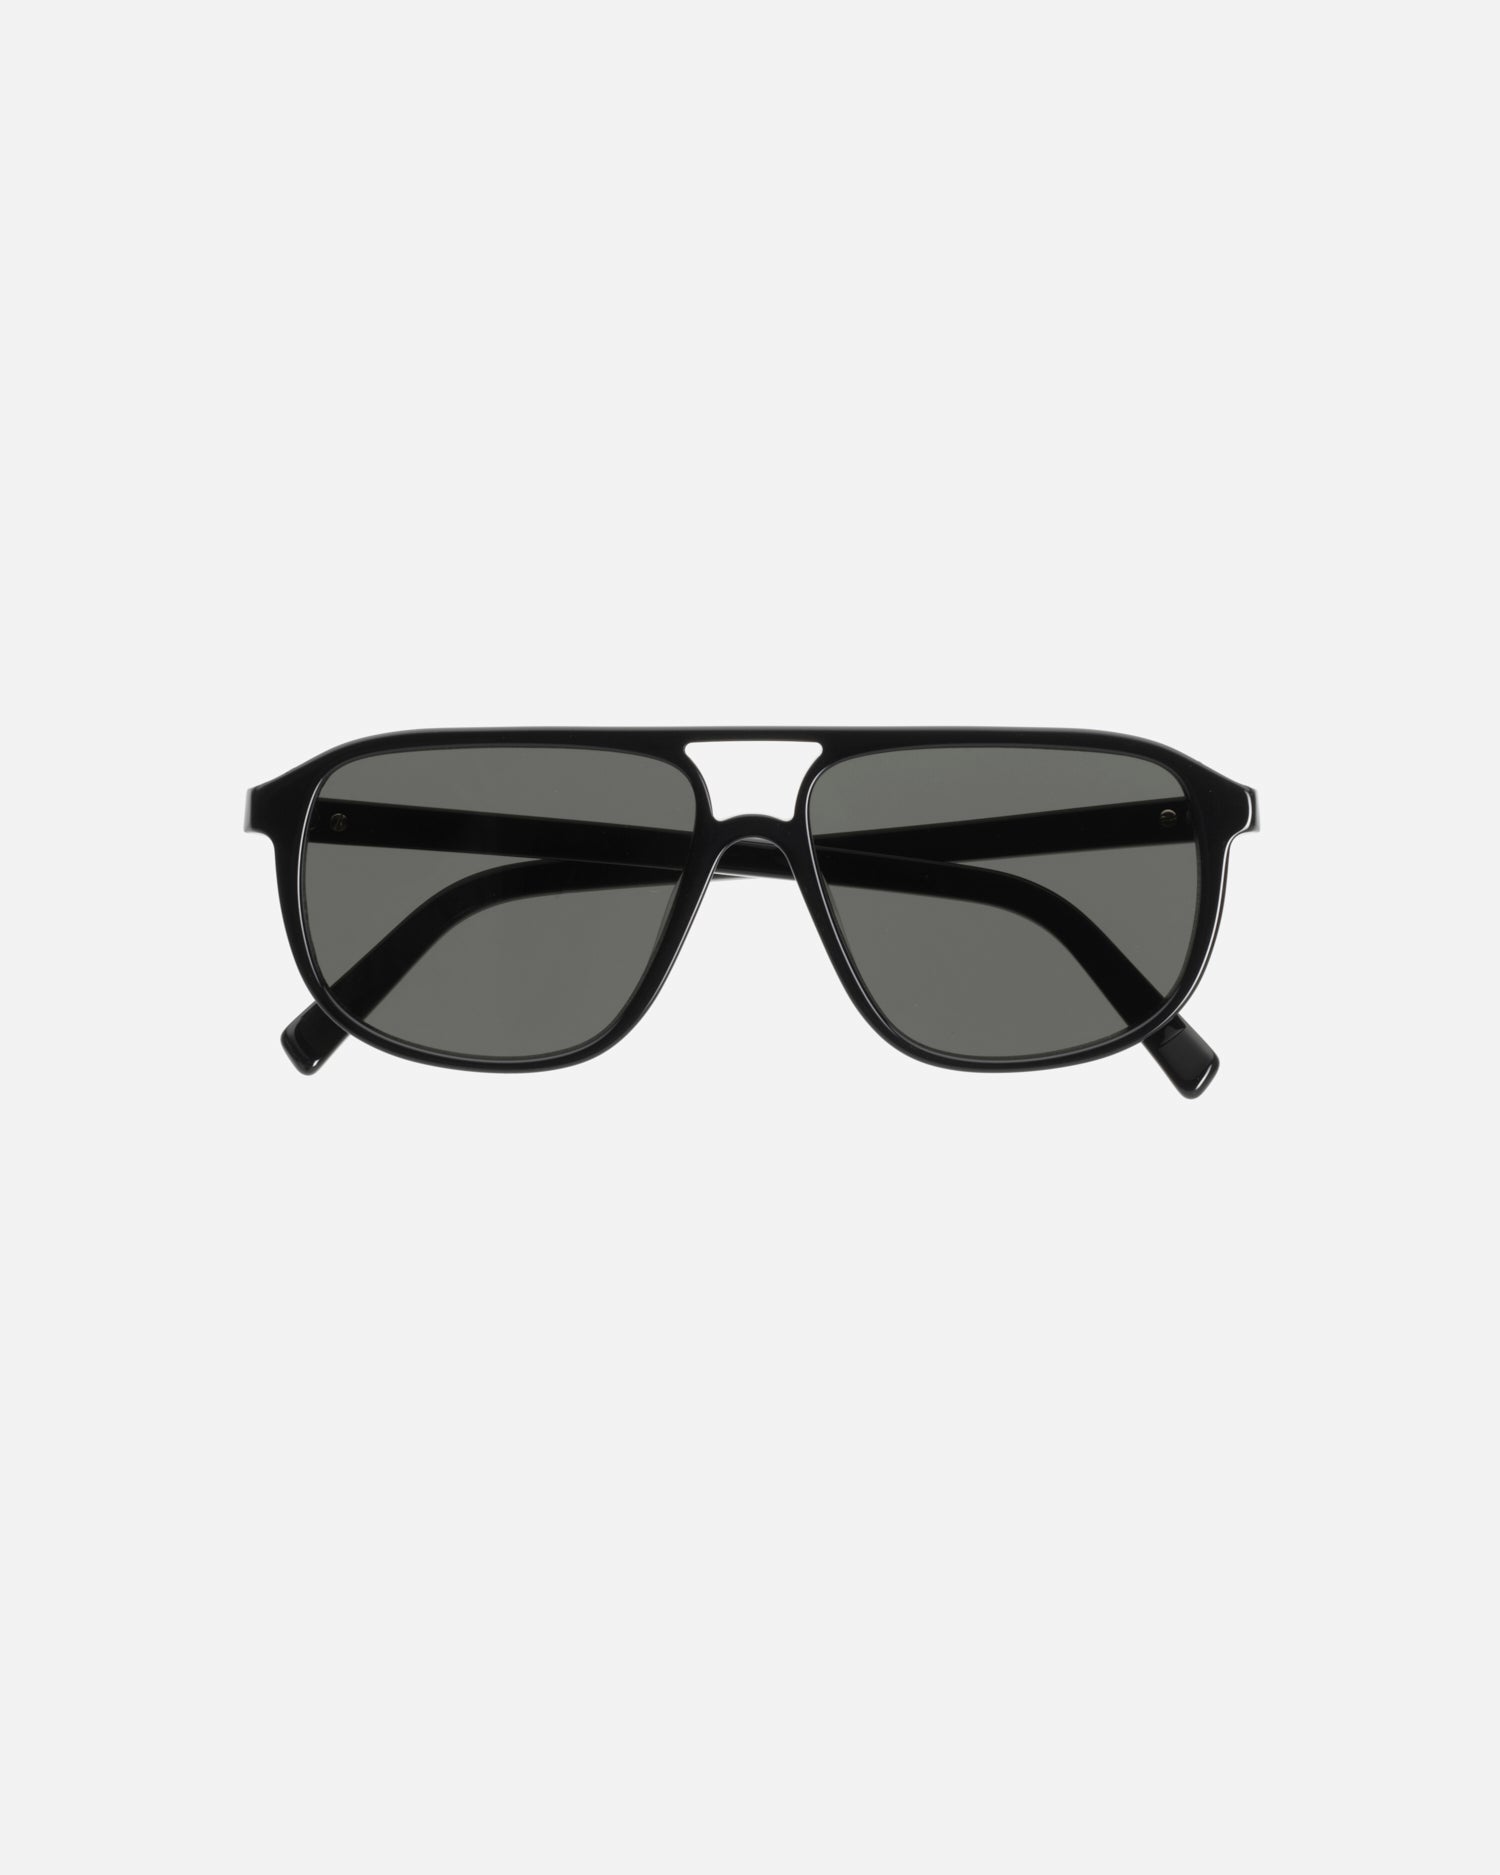 La Touriste luxe sunglasses by Velvet Canyon in Black